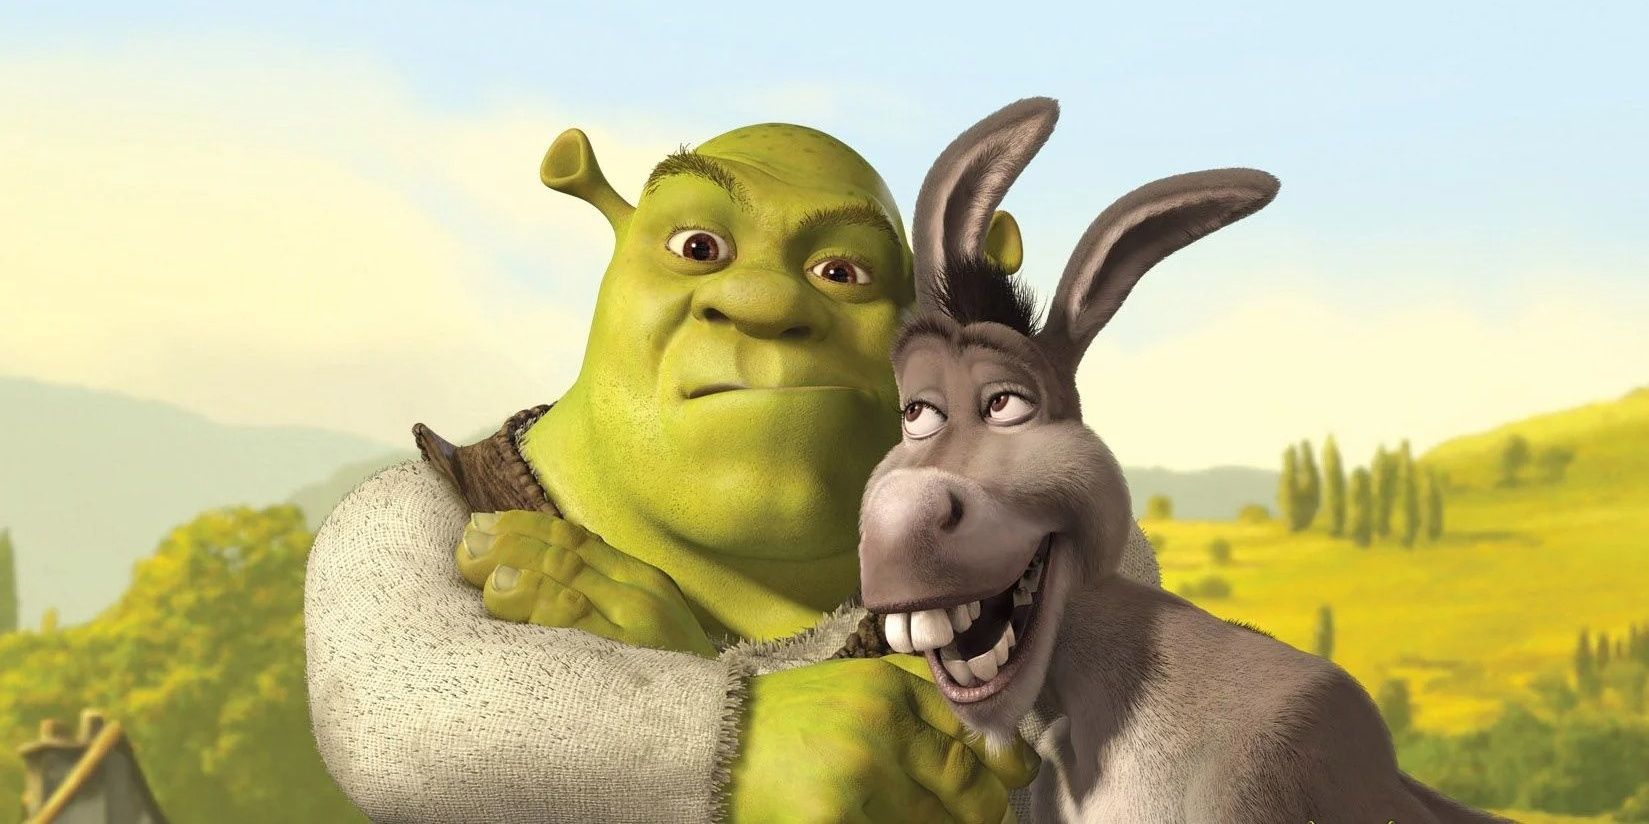 Shrek and Donkey smiling in Shrek.